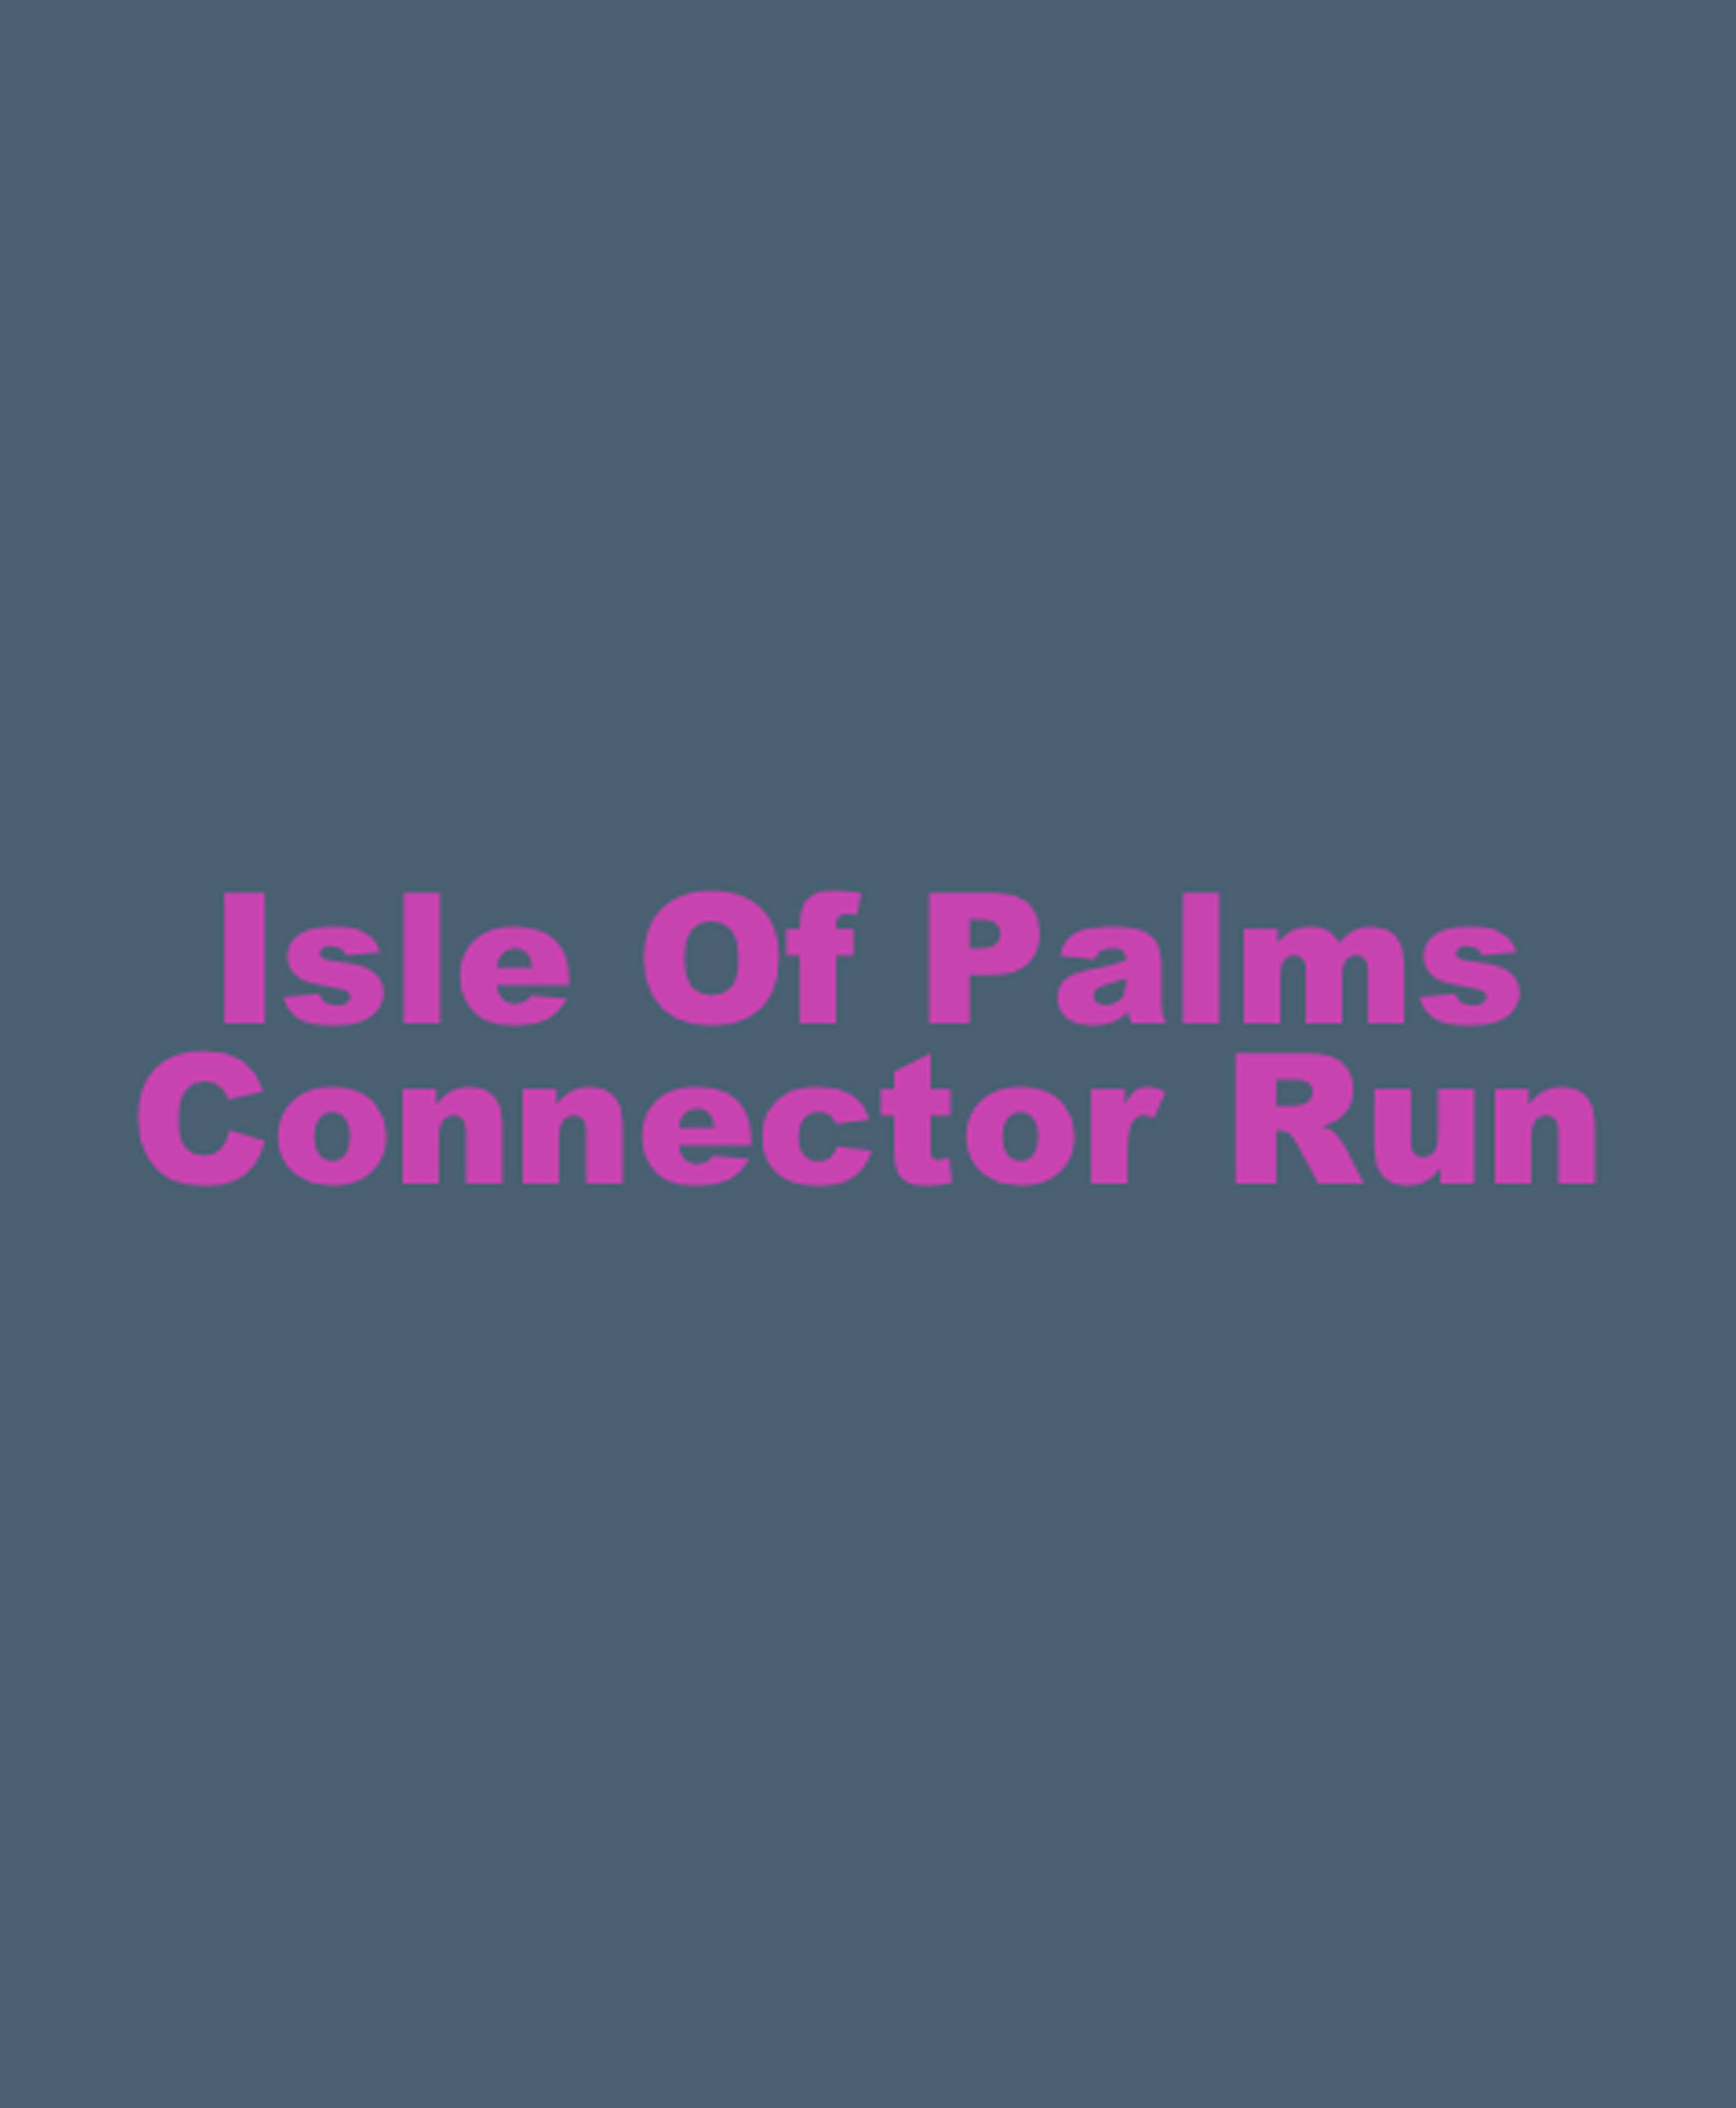 Isle of Palms Connector Run